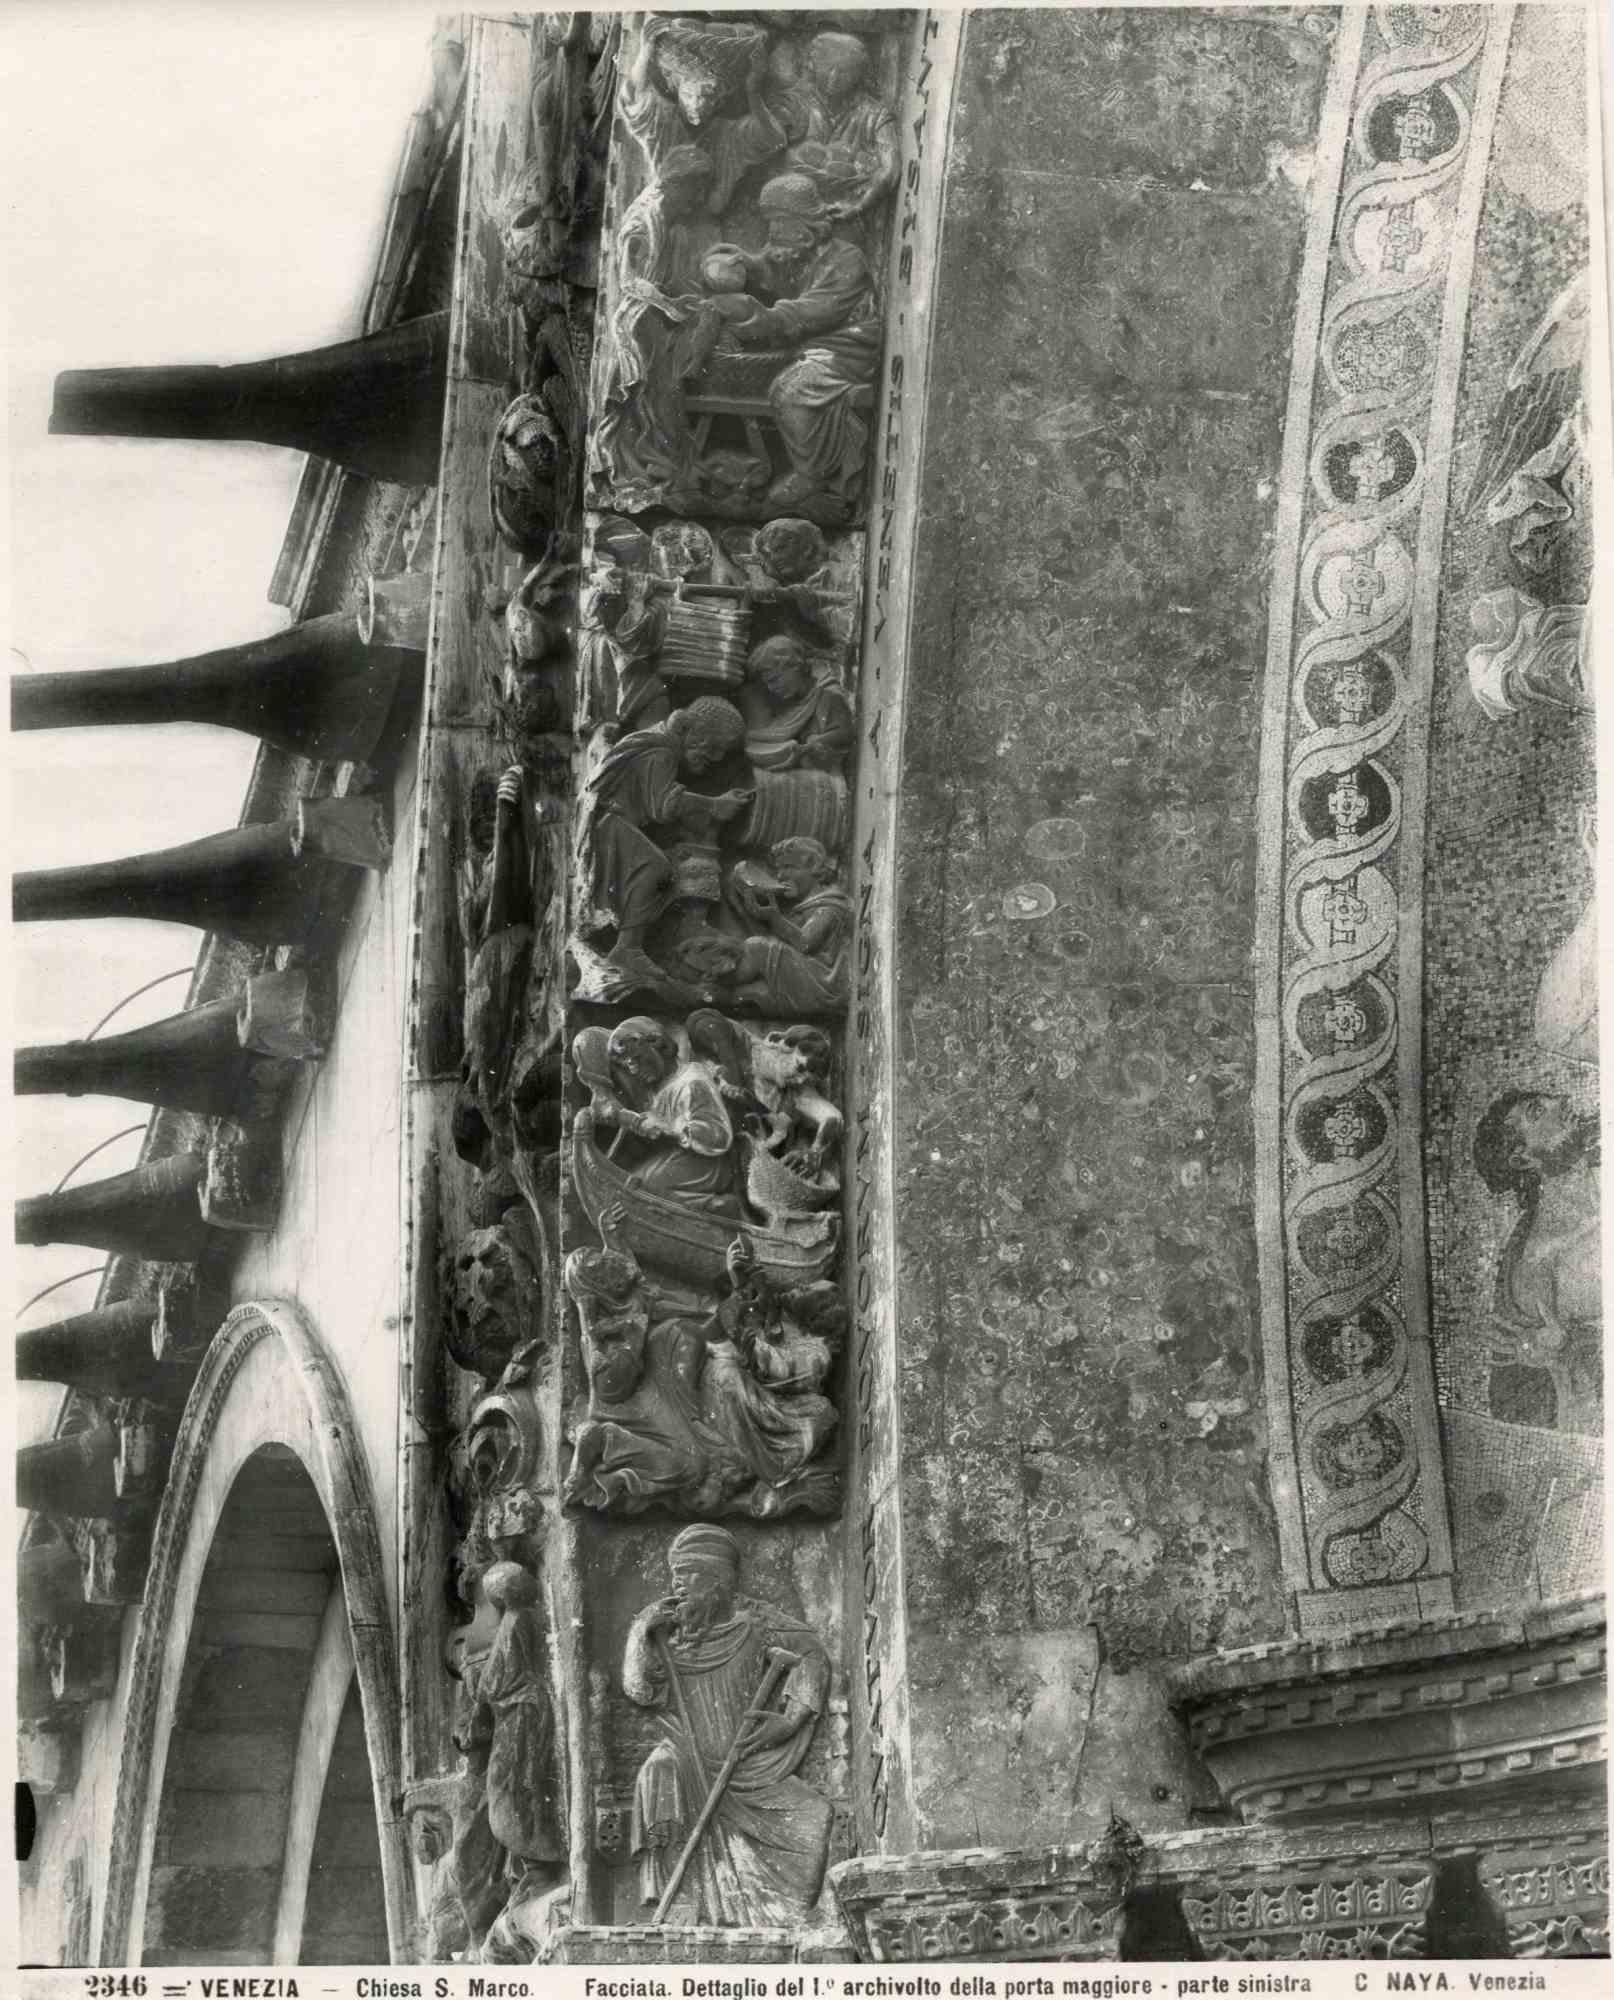 Osvaldo Böhm Black and White Photograph - Venice San Marco Church, Vintage Photo Detail by O. Böhm - Early 20th Century